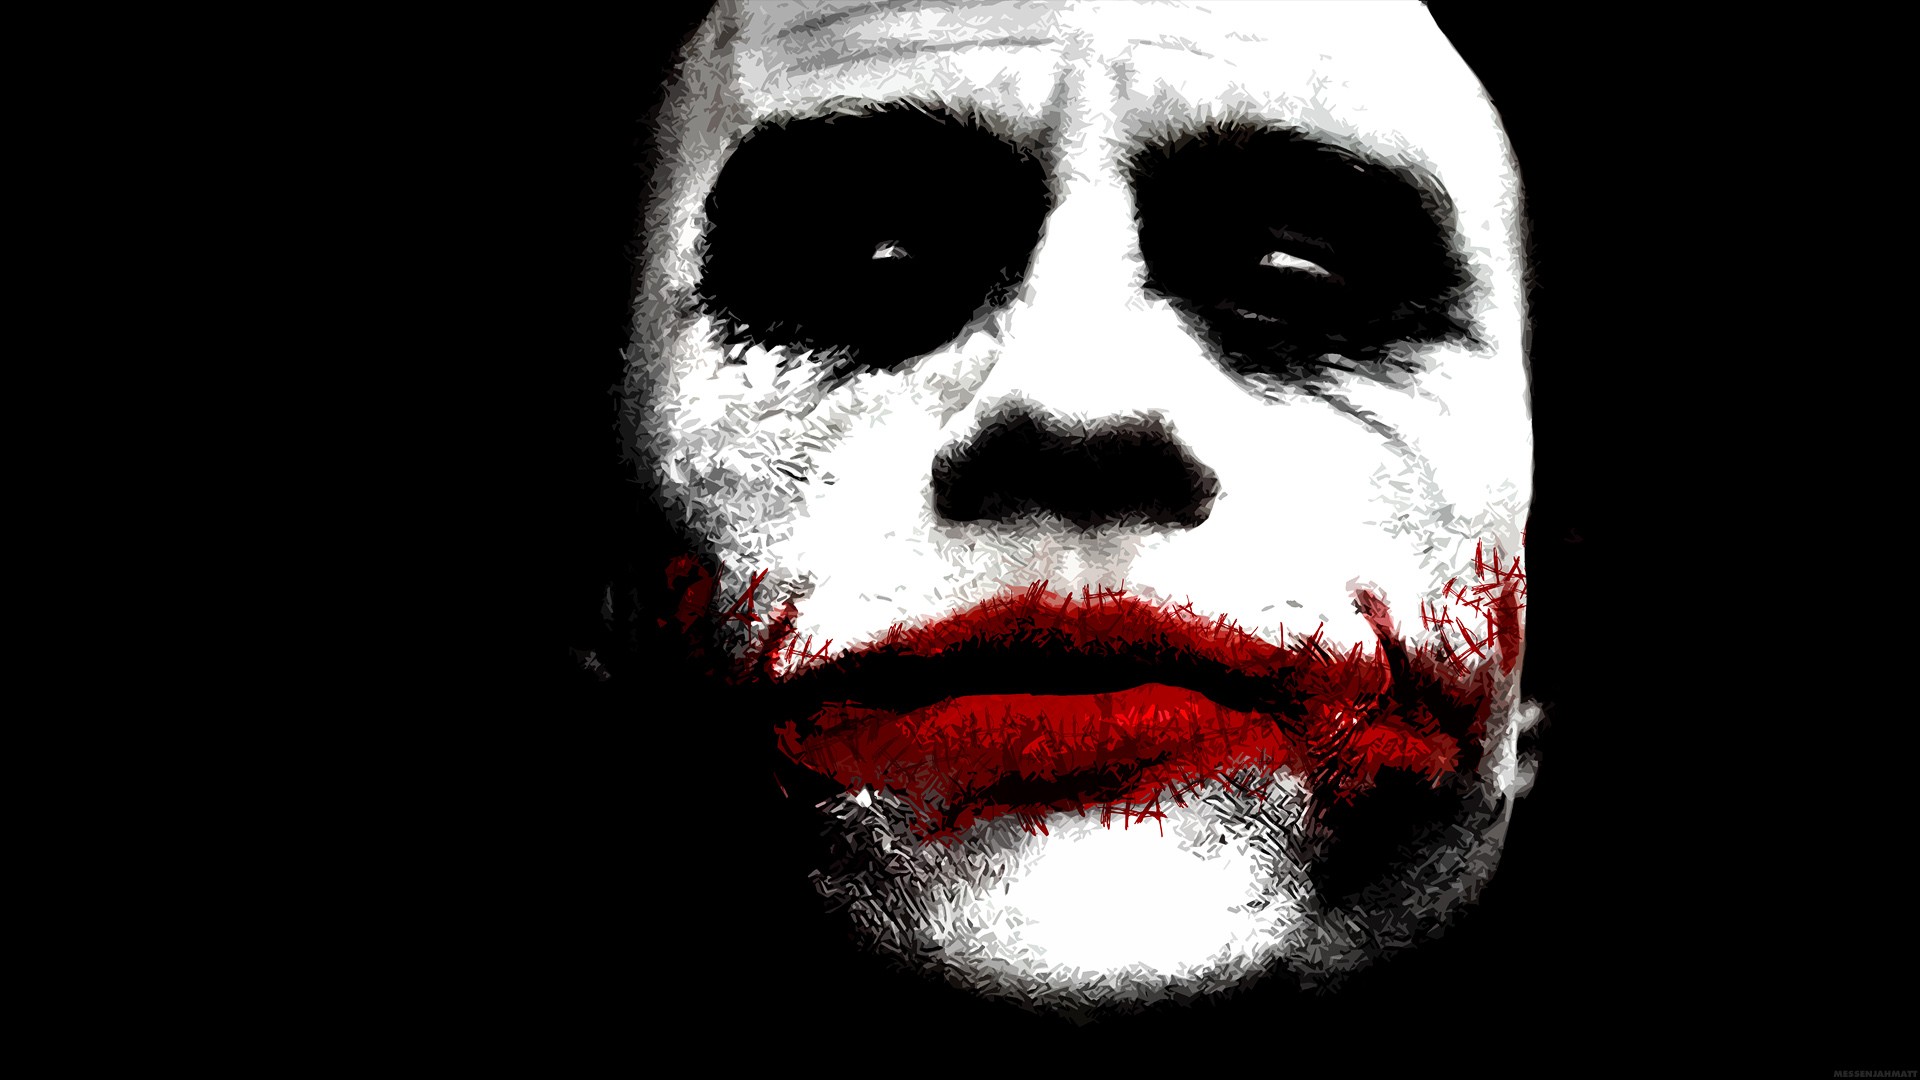 Download wallpaper for 720x1280 resolution | Batman The Dark Knight Joker  Face HD | movies and tv series | Wallpaper Better